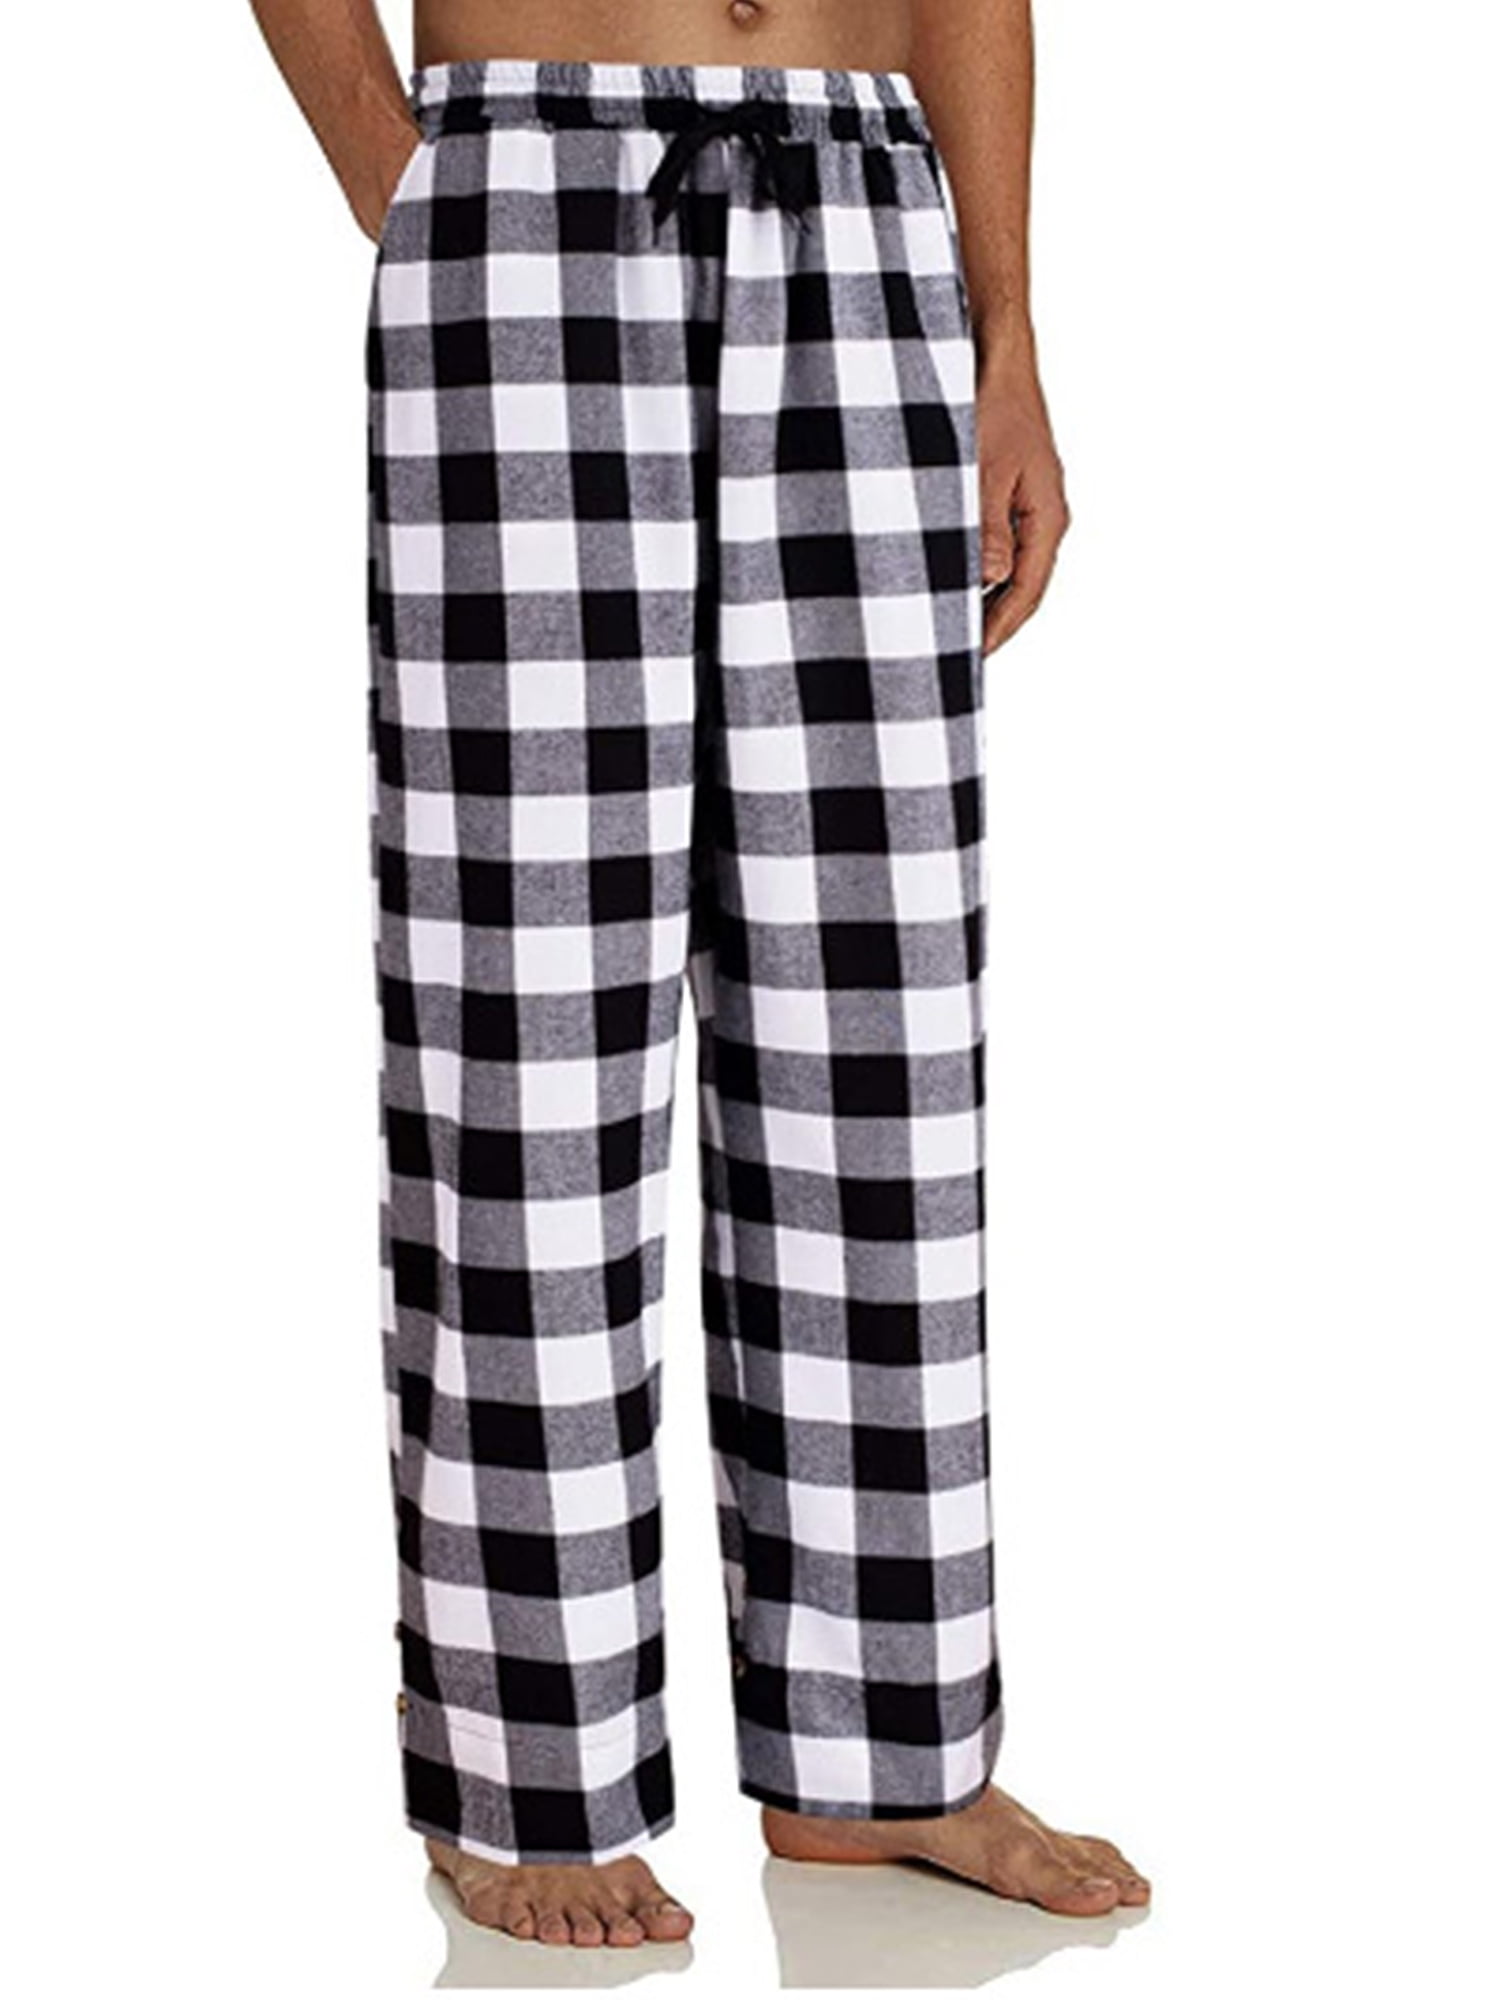 Women Home Pants with Pocket Classic Stripe Lattice Pants Summer Home Wear Drawstring Cotton Soft Loose Casual Pajamas PJS Sleepwear Sleep Bottoms